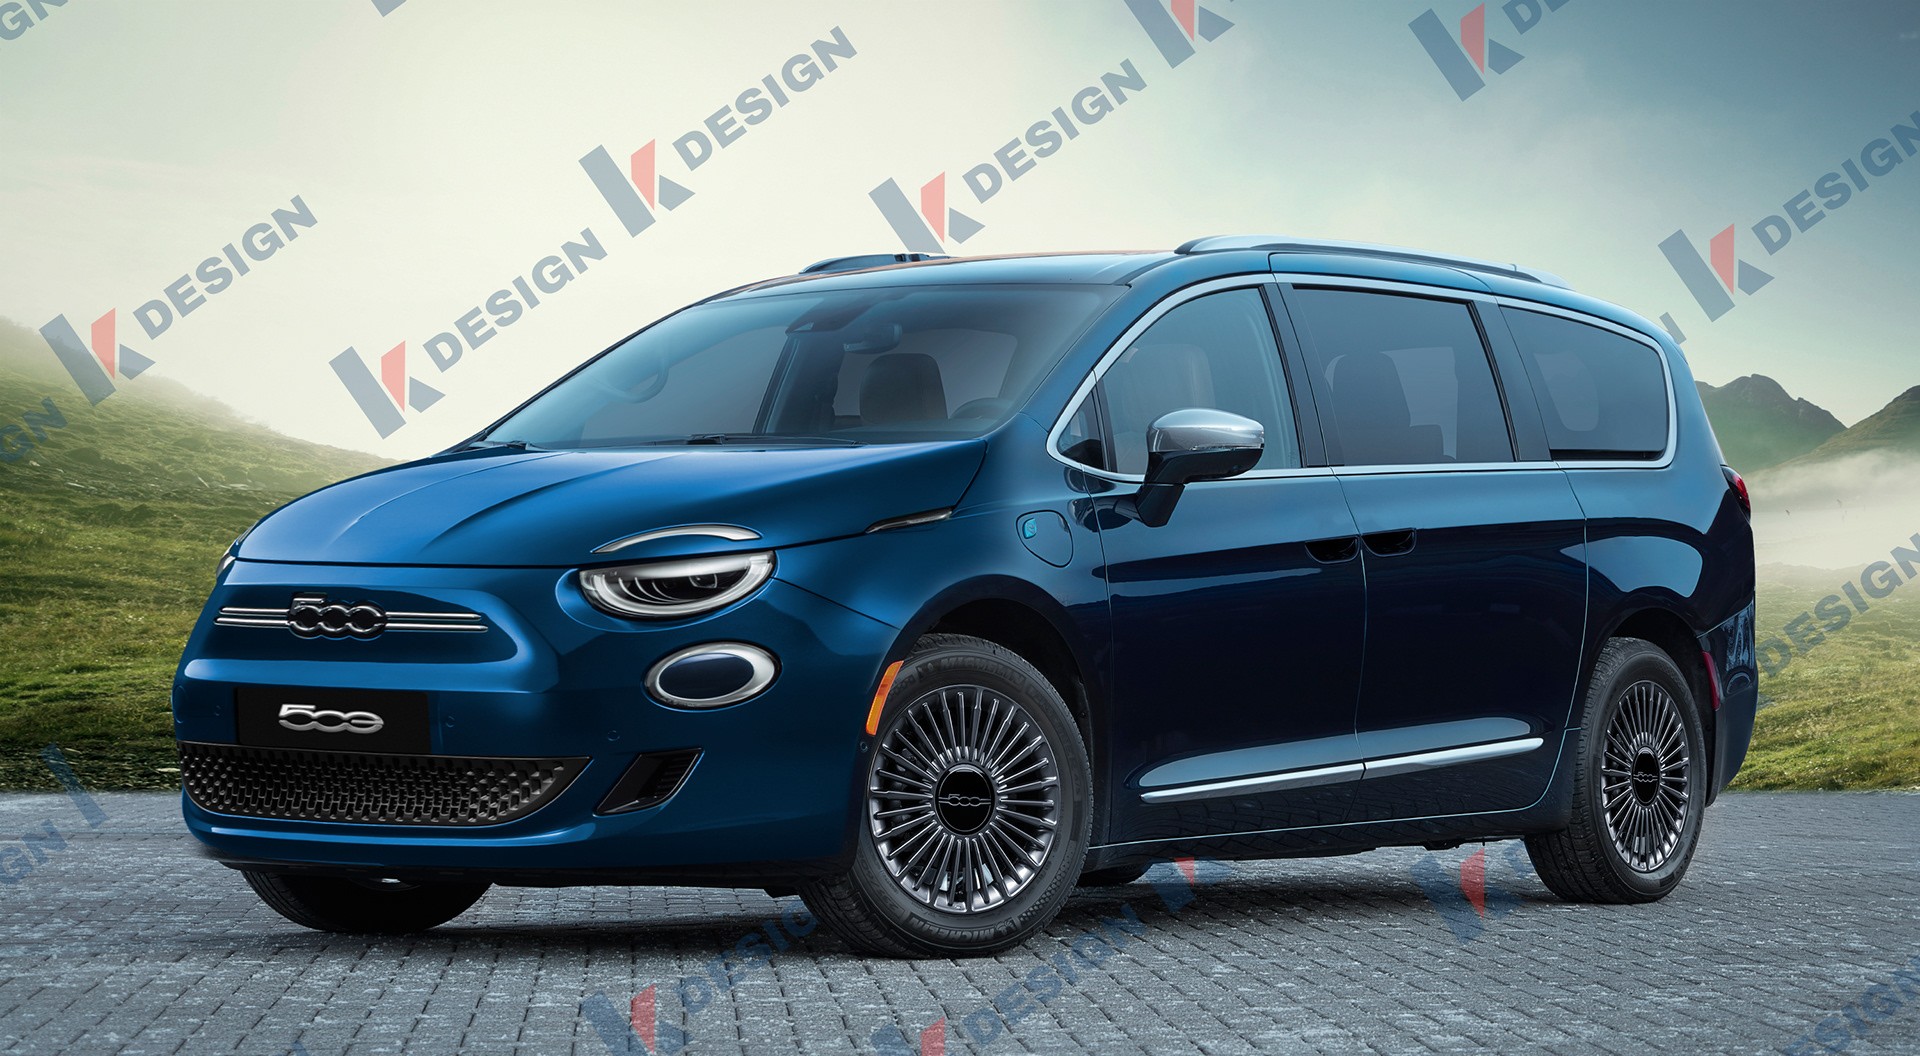 CGI Fiat Grand 500e Makes Our Chrysler Pacifica EV Minivan ‘Dreams